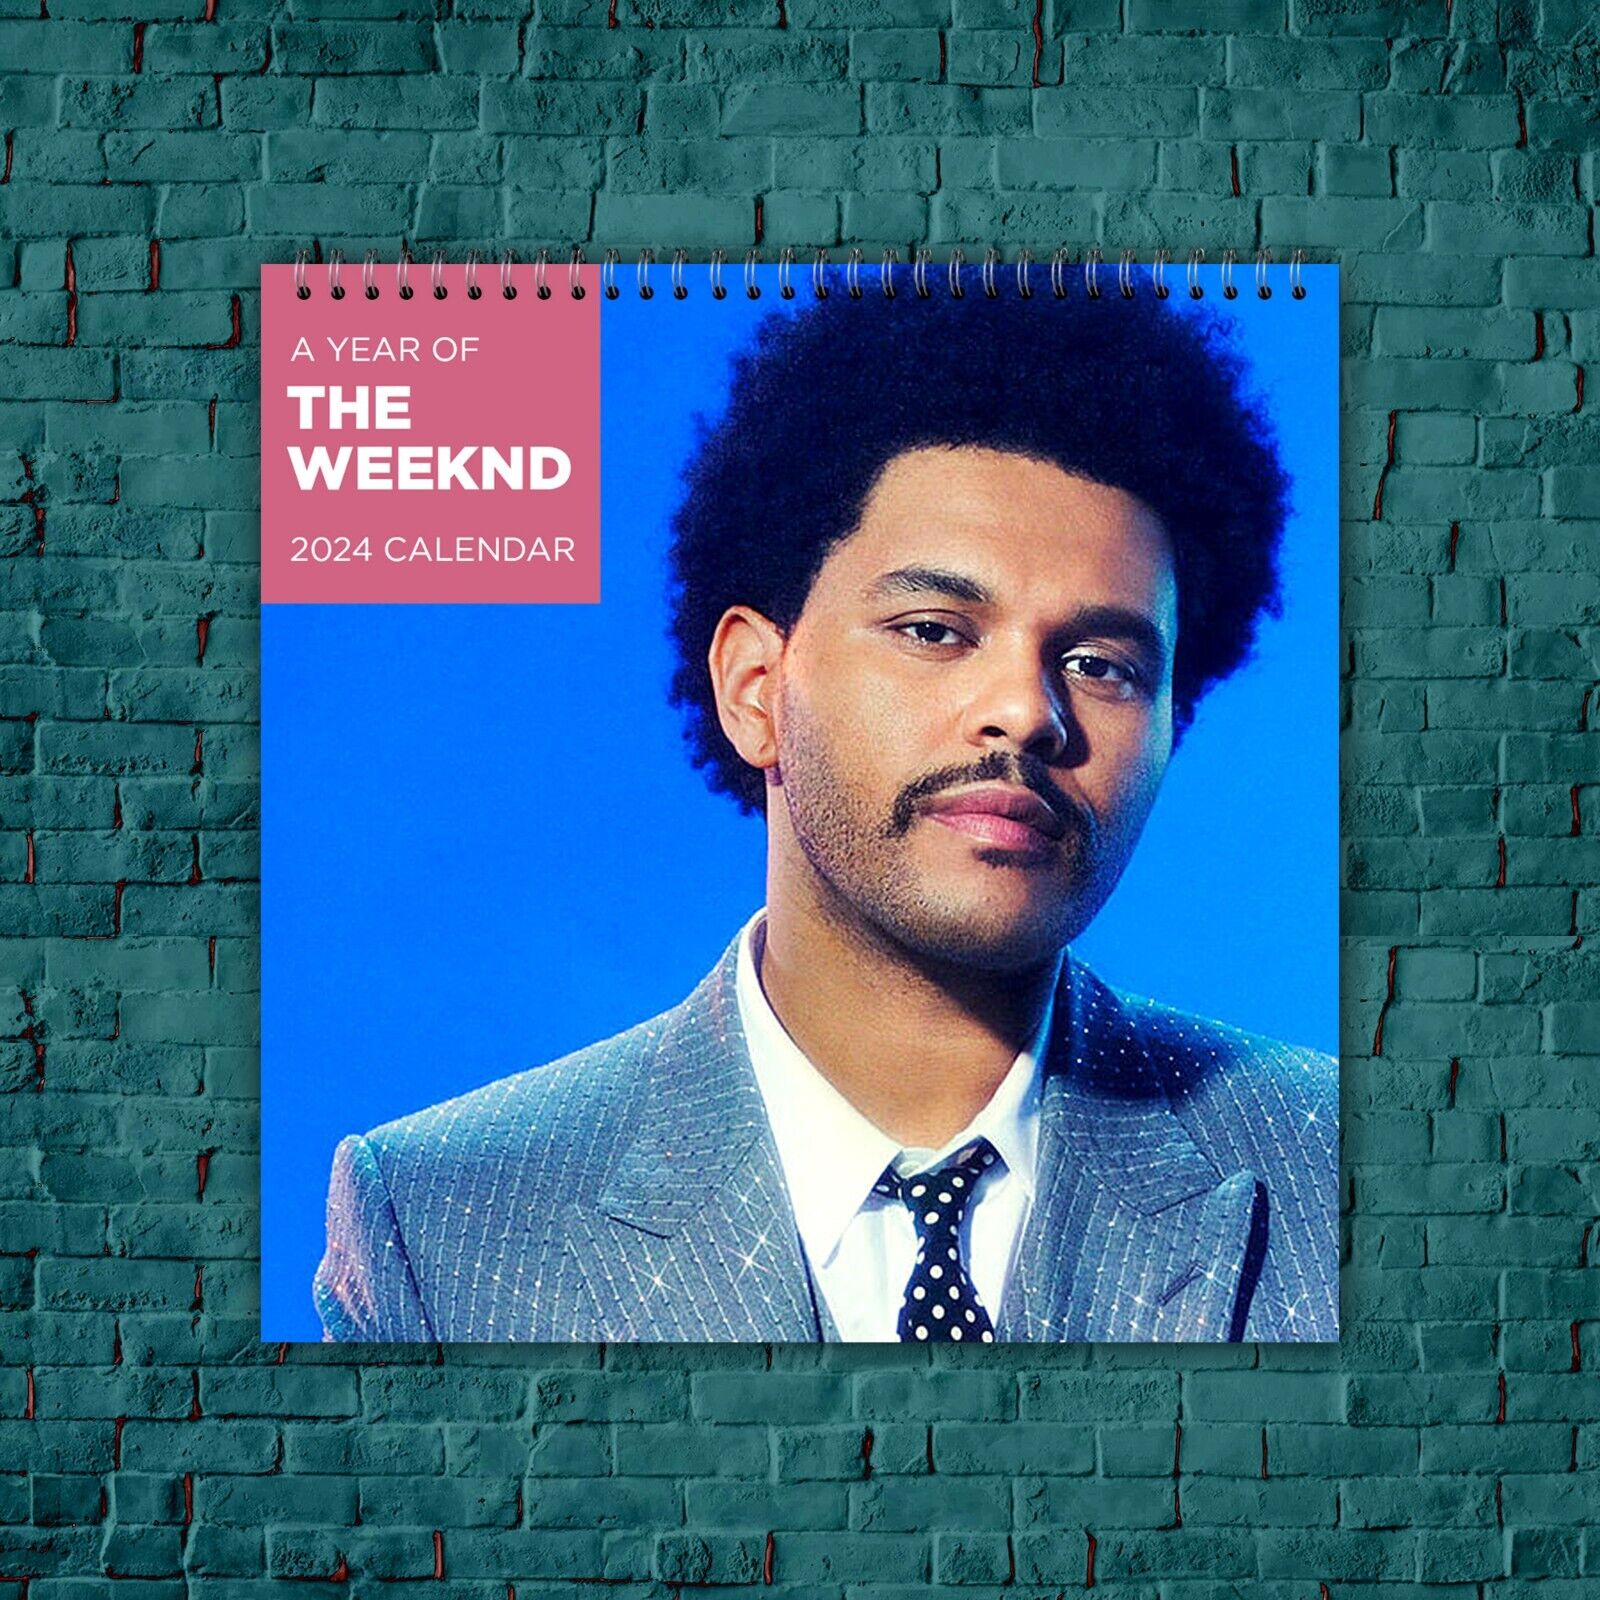 The Weeknd Calendar 2024, Celebrity Calendar, The Weeknd 2024 Wall